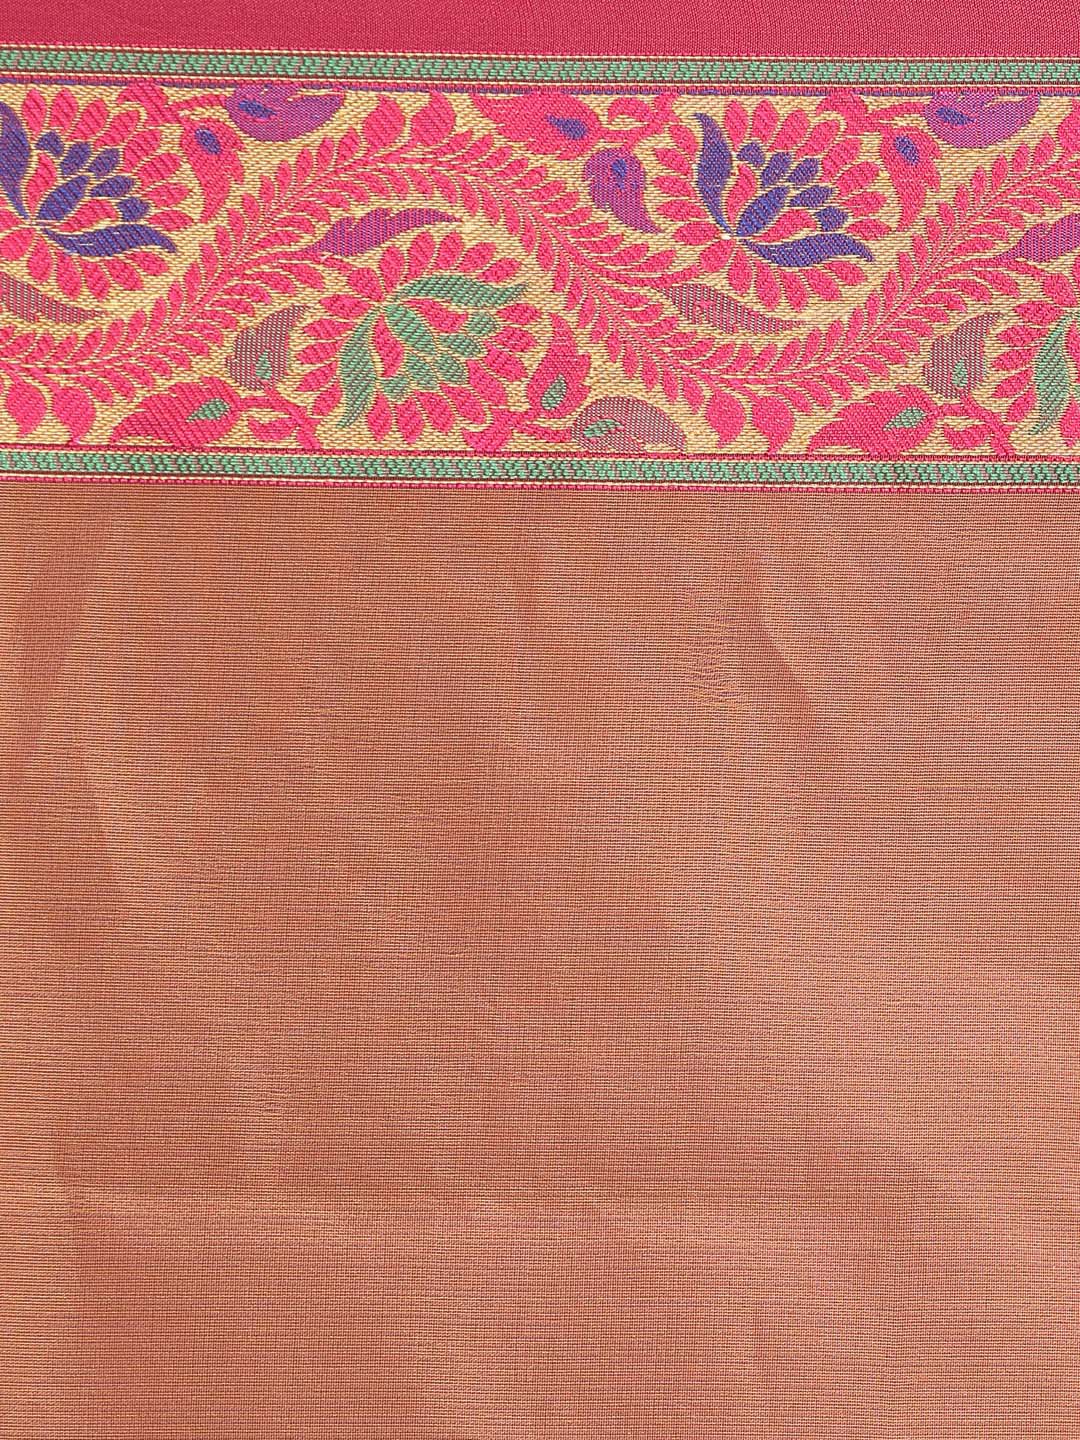 Indethnic Banarasi Peach Solid Party Wear Saree - Saree Detail View